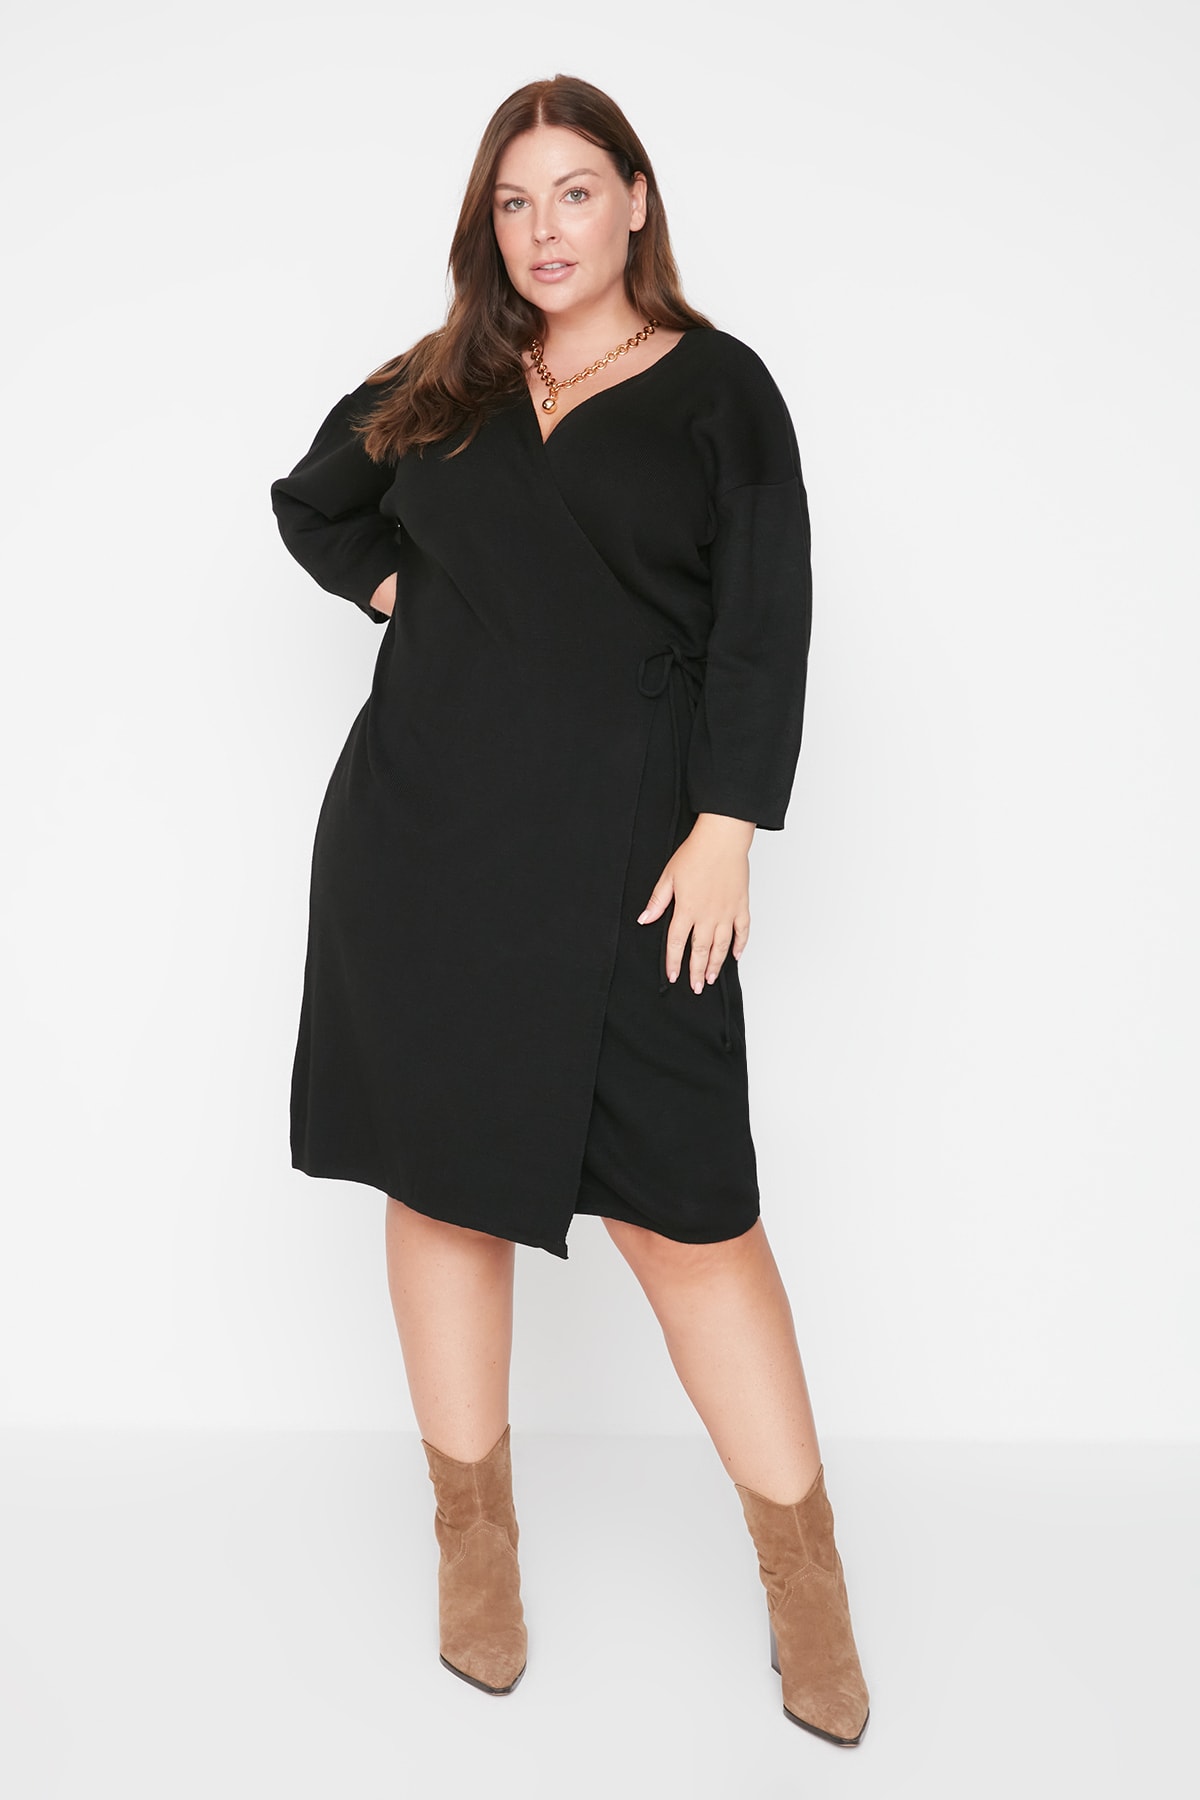 Trendyol Plus Size Black Lace-Up Sweater Dress